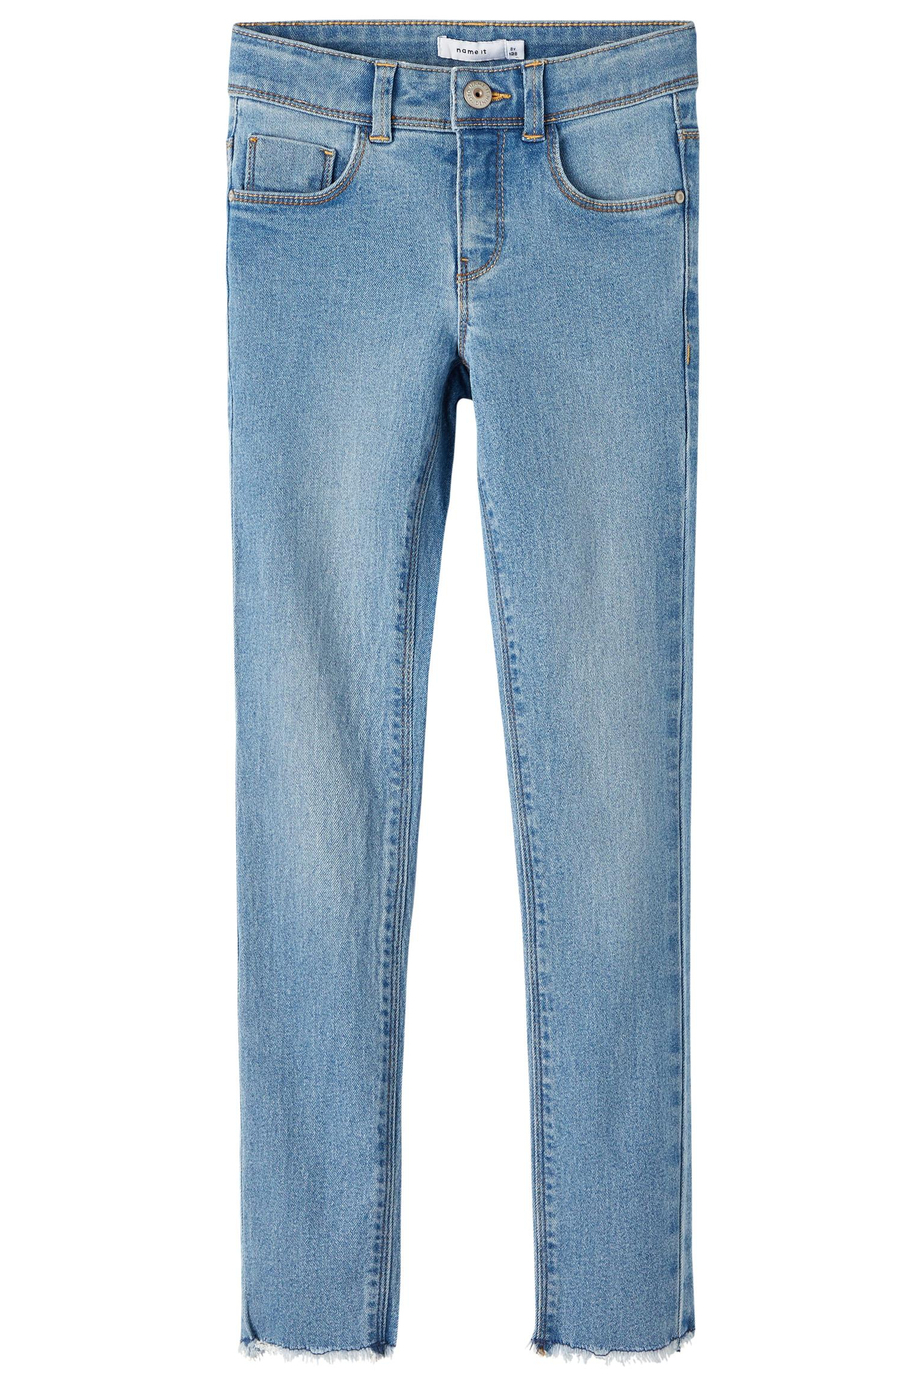 Zullen Mark verhouding nkfpolly skinny jeans 1191-io noos 13211899 name it jeans light blue denim